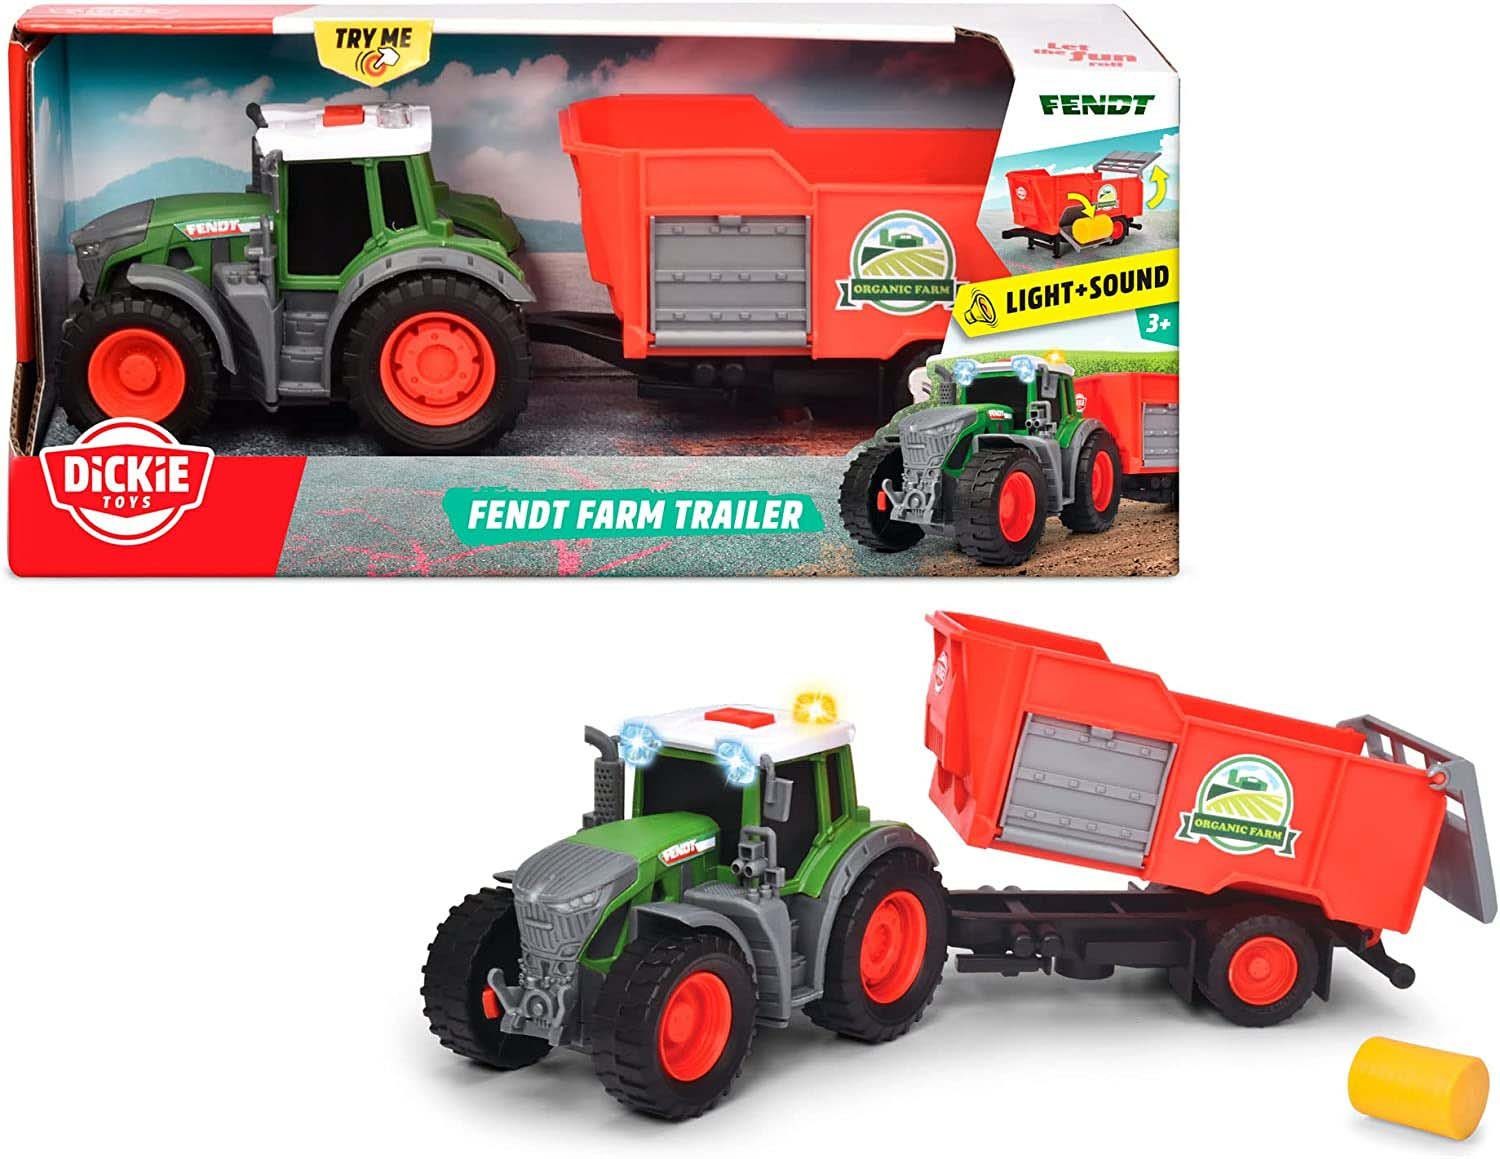 SIMBA Spielzeug-Traktor Dickie Toys 203734001 - Fendt Farm Trailer